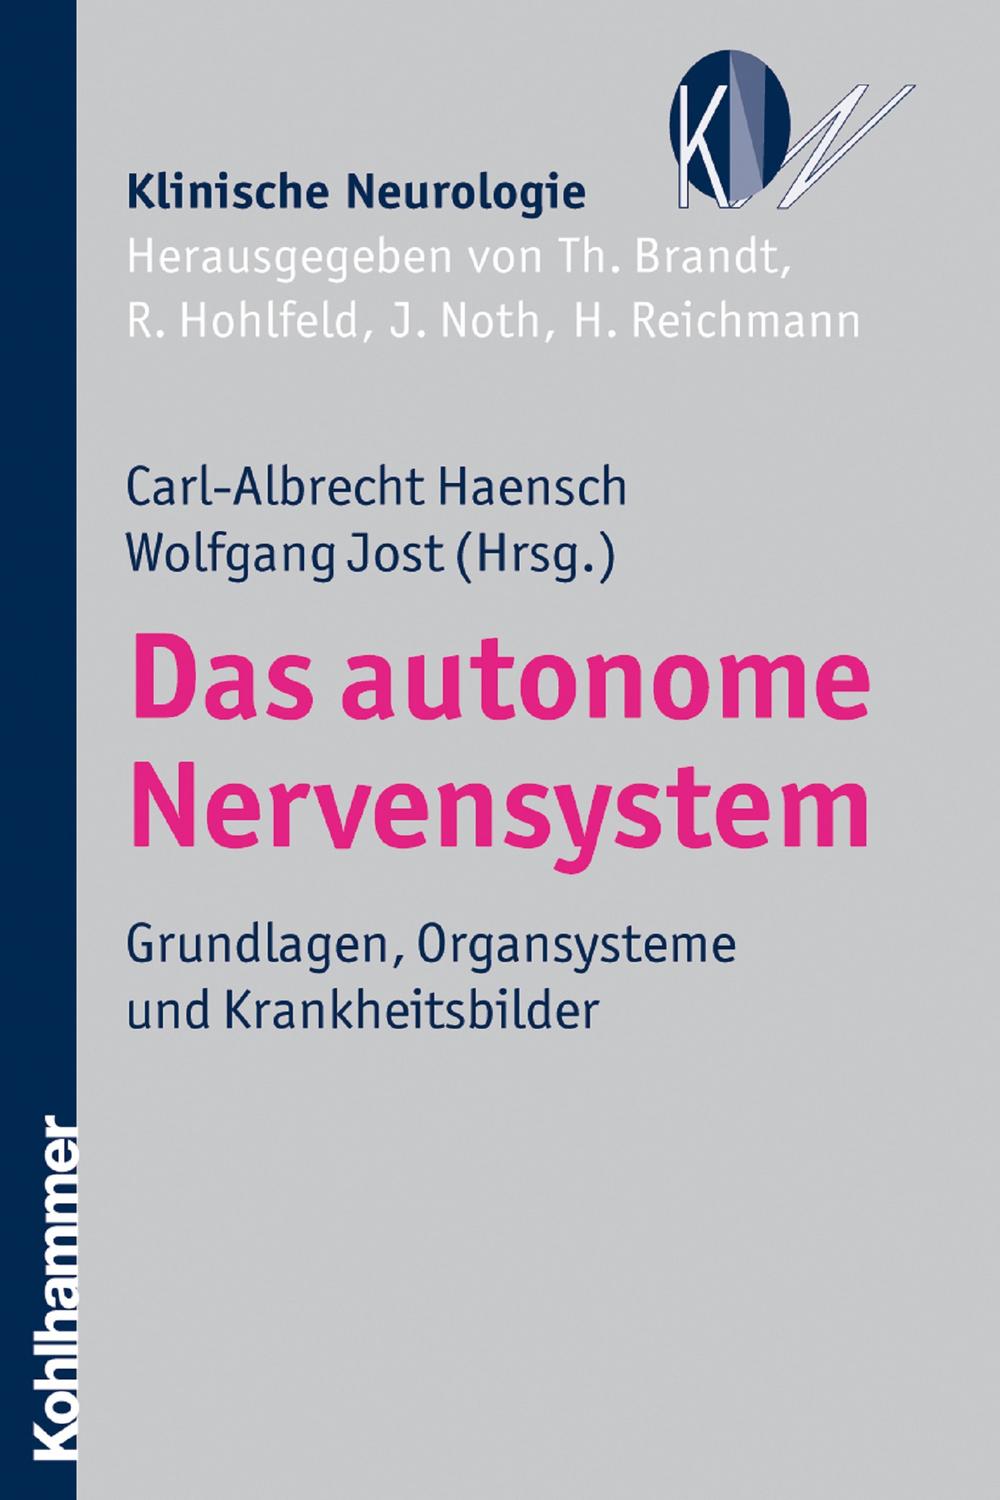 Das autonome Nervensystem - Thomas Brandt, Reinhard Hohlfeld, Johannes Noth, Heinz Reichmann, Carl-Albrecht Haensch, Wolfgang Jost